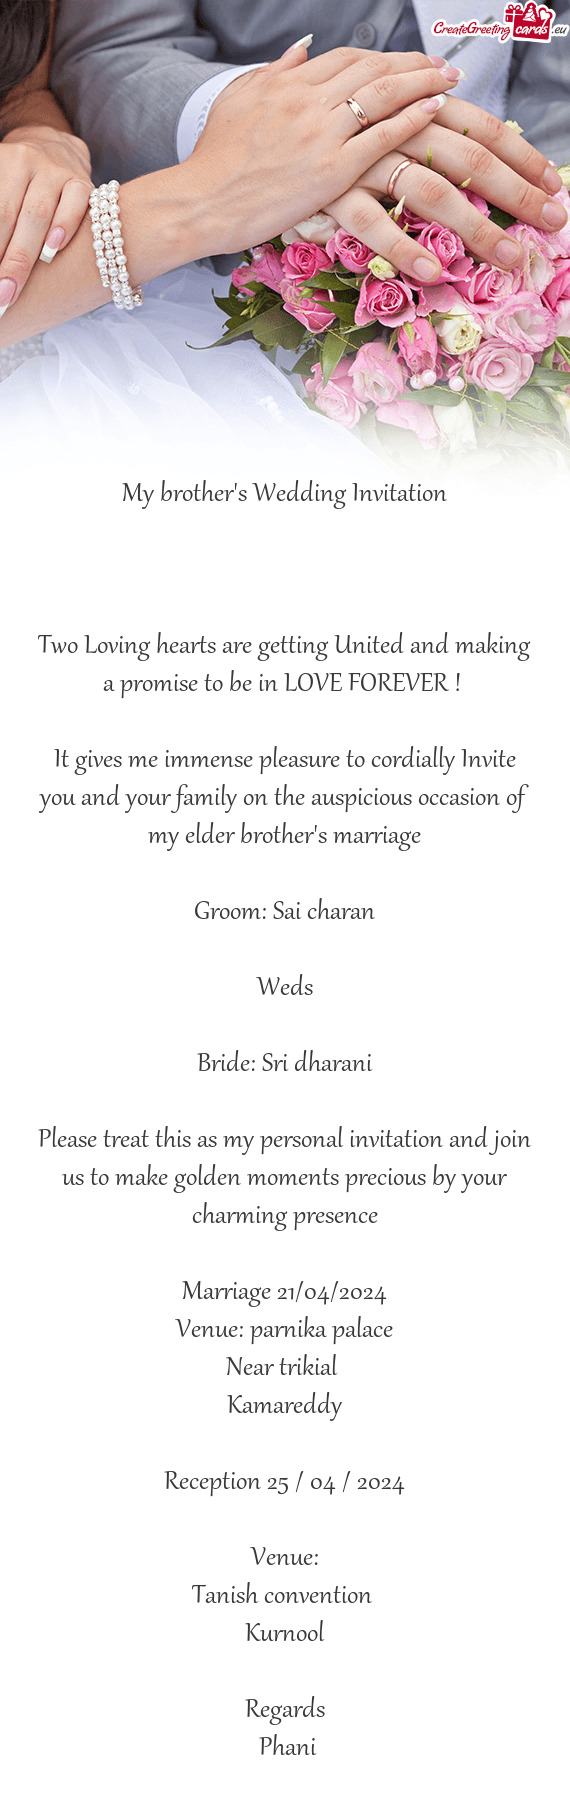 Bride: Sri dharani